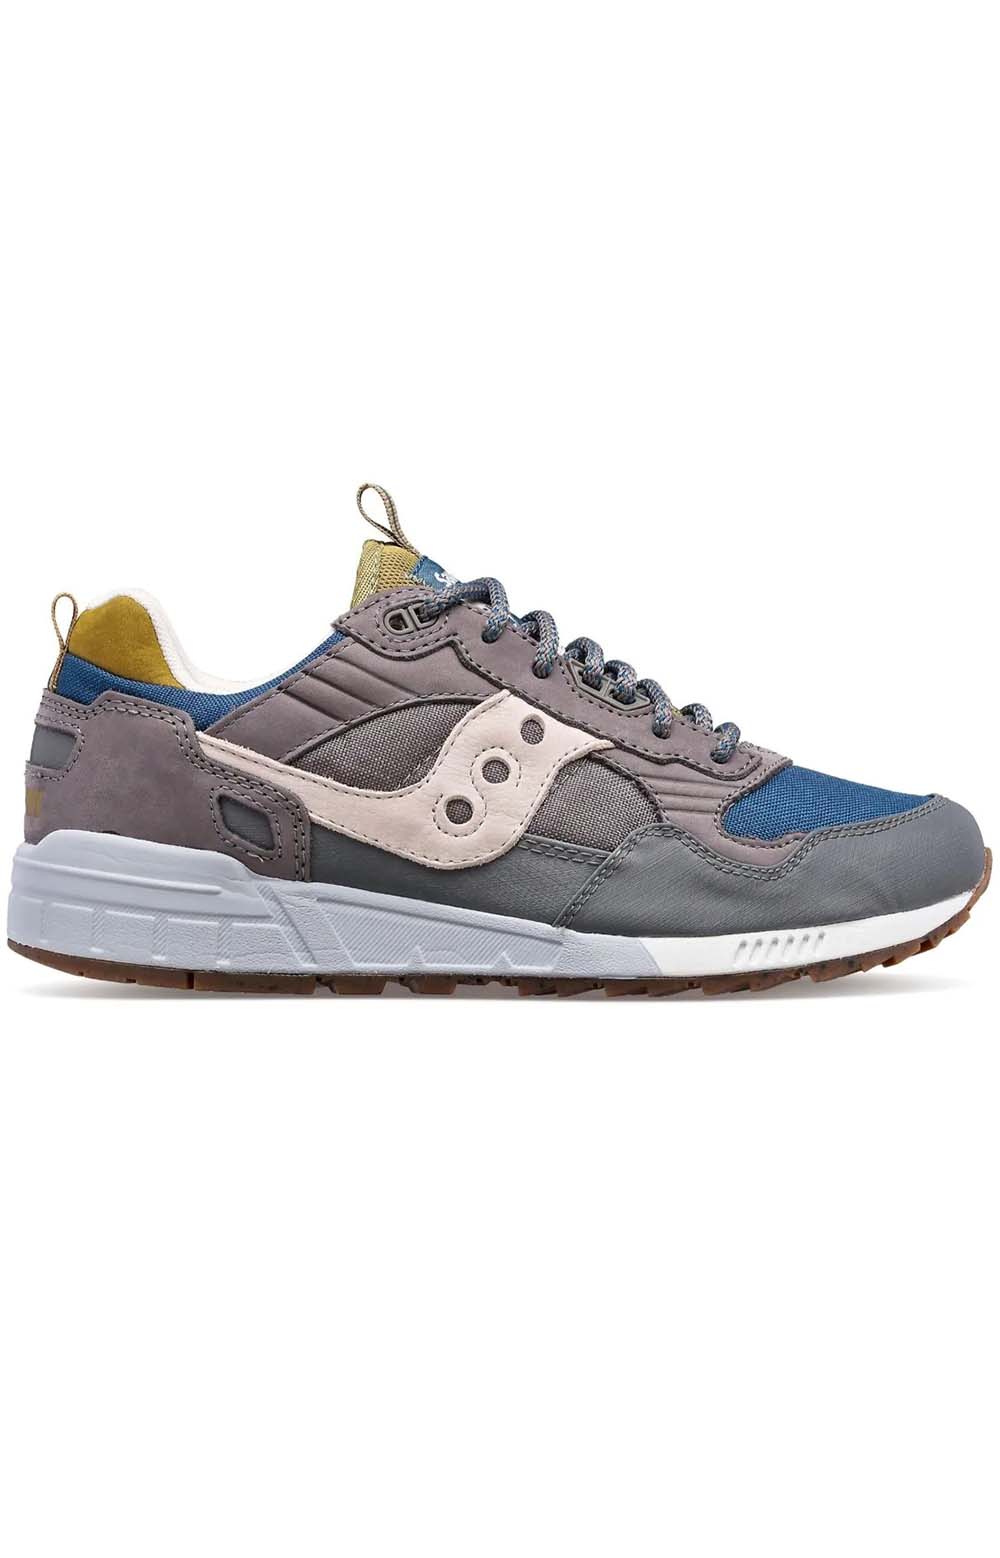 Saucony, (S70717-1) Shadow 6000 Felt Shoes - Grey/Multi – MLTD